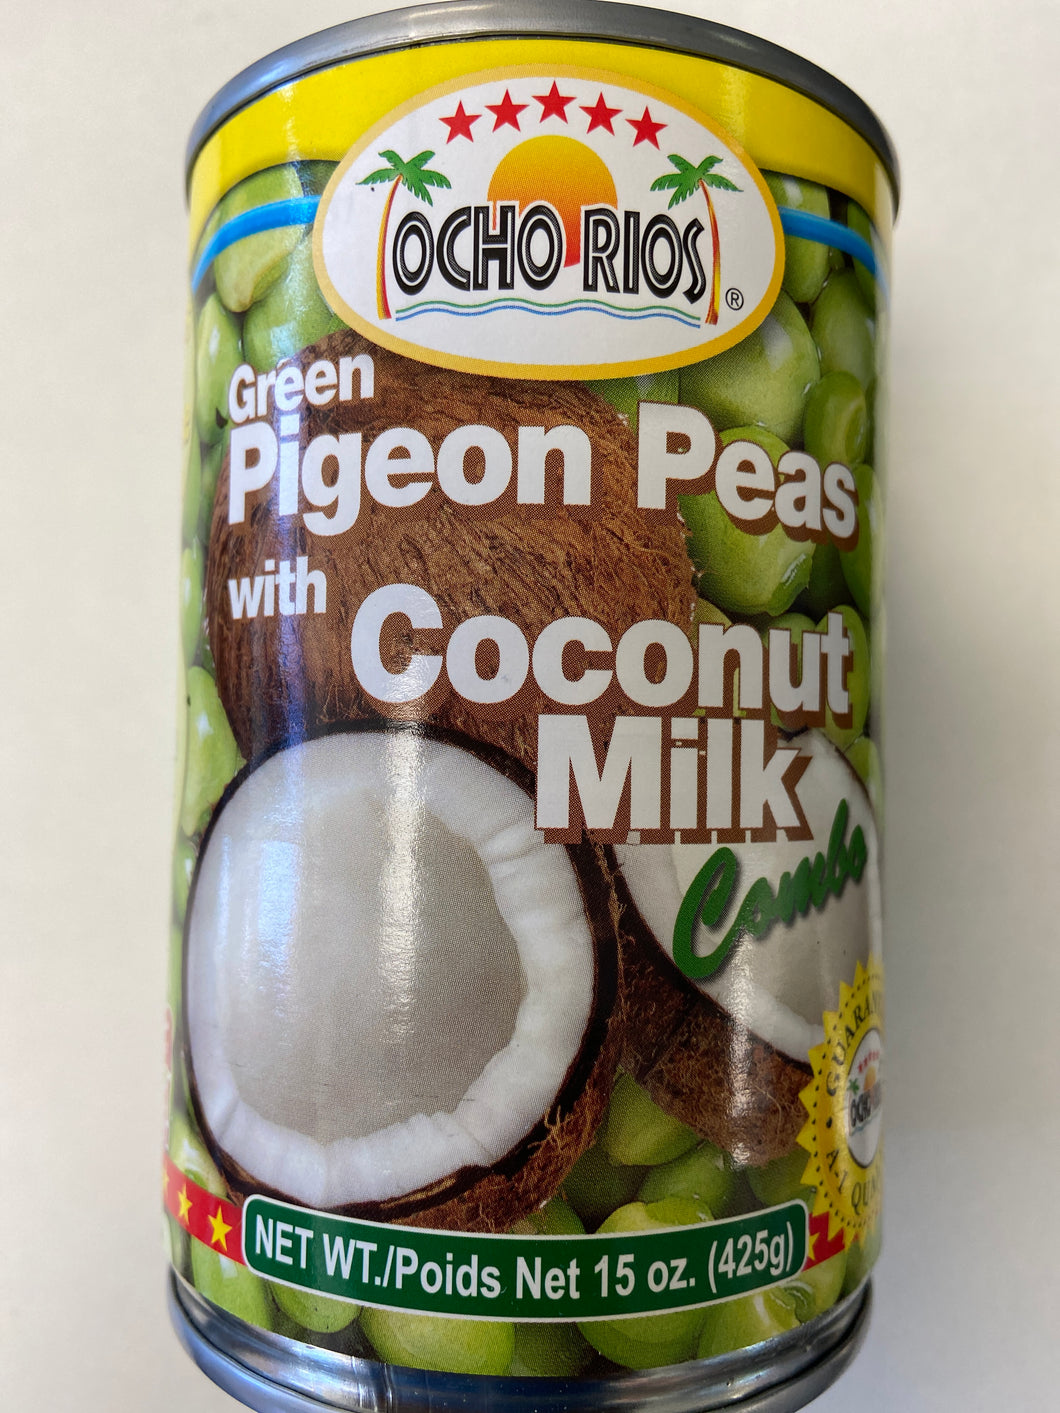 Pigeon Peas, Green, with Coconut Milk, Ocho Rios